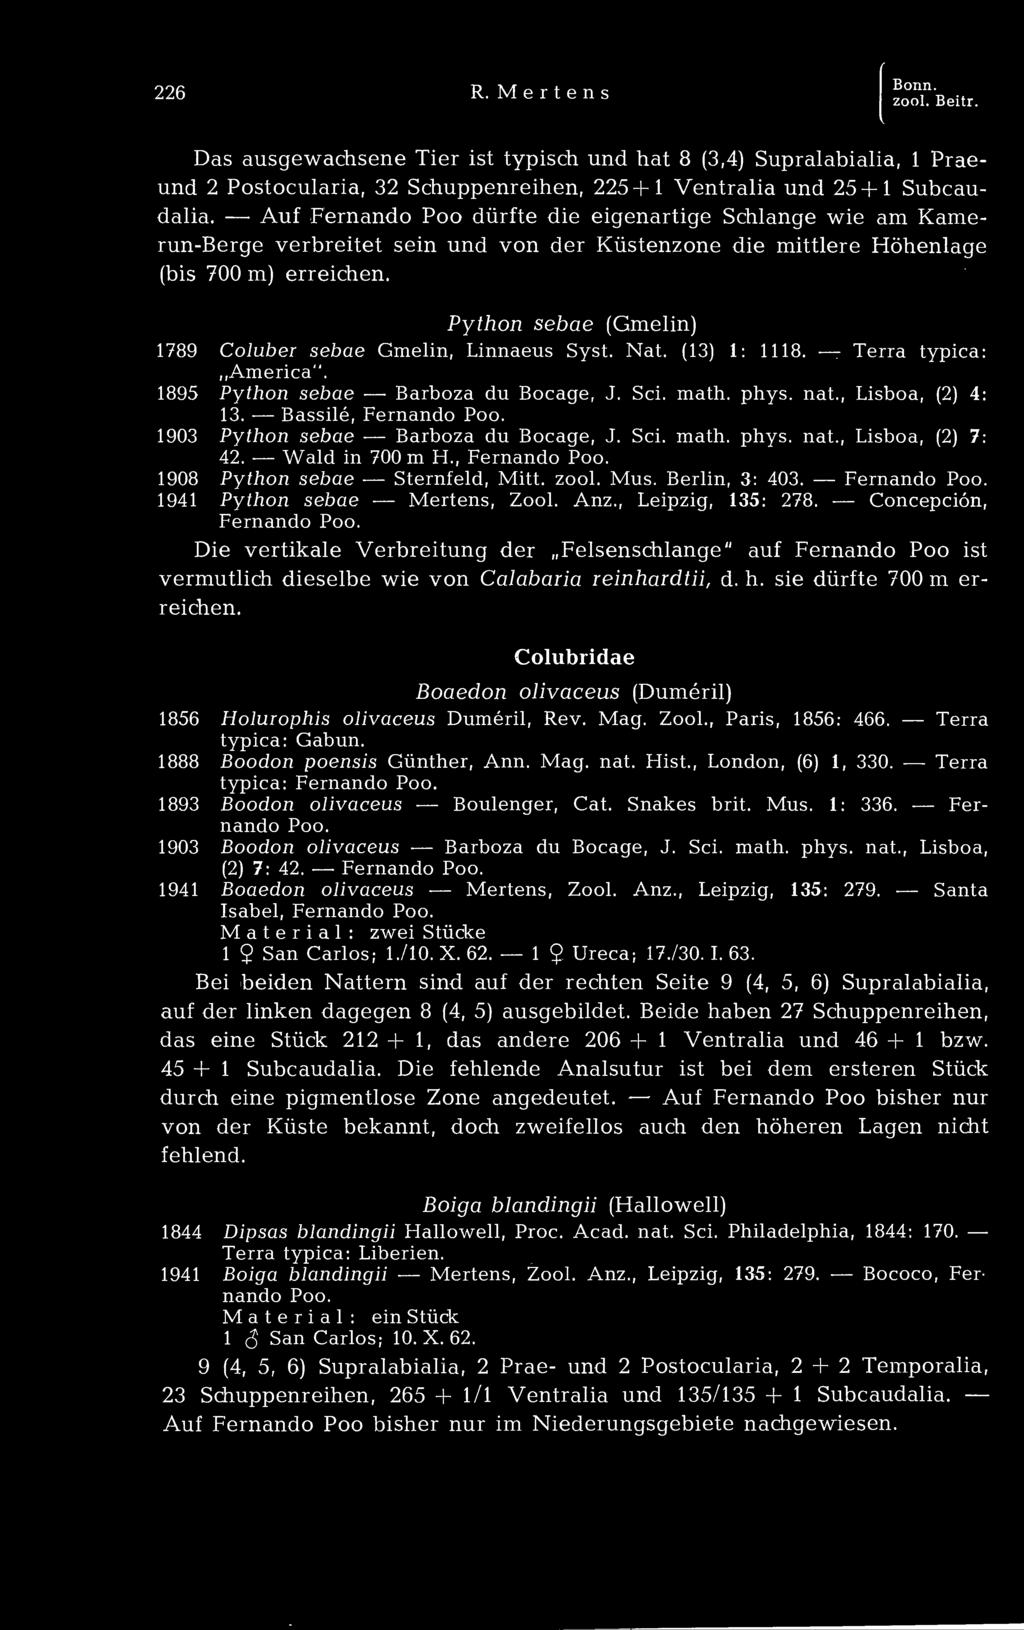 Python sebae (Gmelin) 1789 Coluber sebae Gmelin, Linnaeus Syst. Nat. (13) 1: 1118. Terra typica: America". 1895 Python sebae Barboza du Bocage, J. Sei. math. phys. nat., Lisboa, (2) 4: 13.